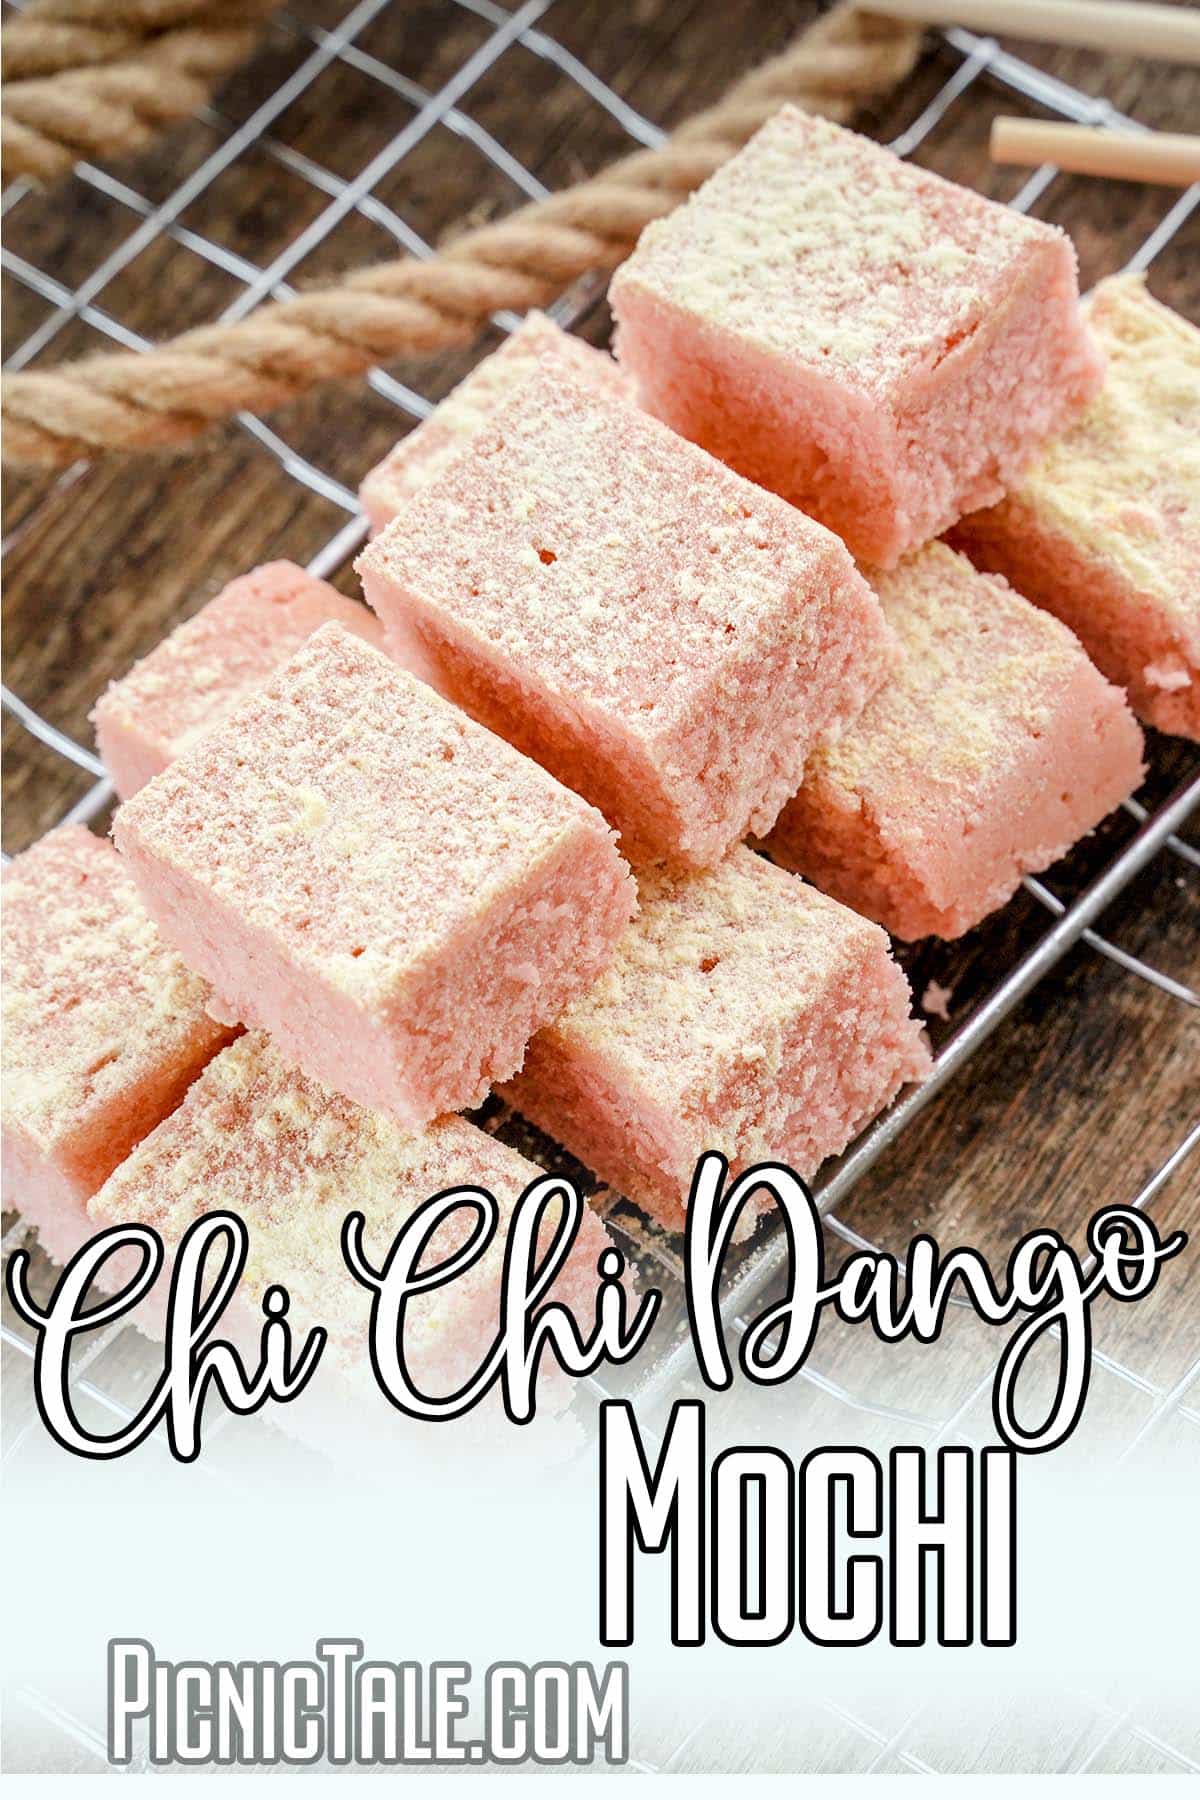 homemade mochi recipe with text which reads chi chi dango mochi 